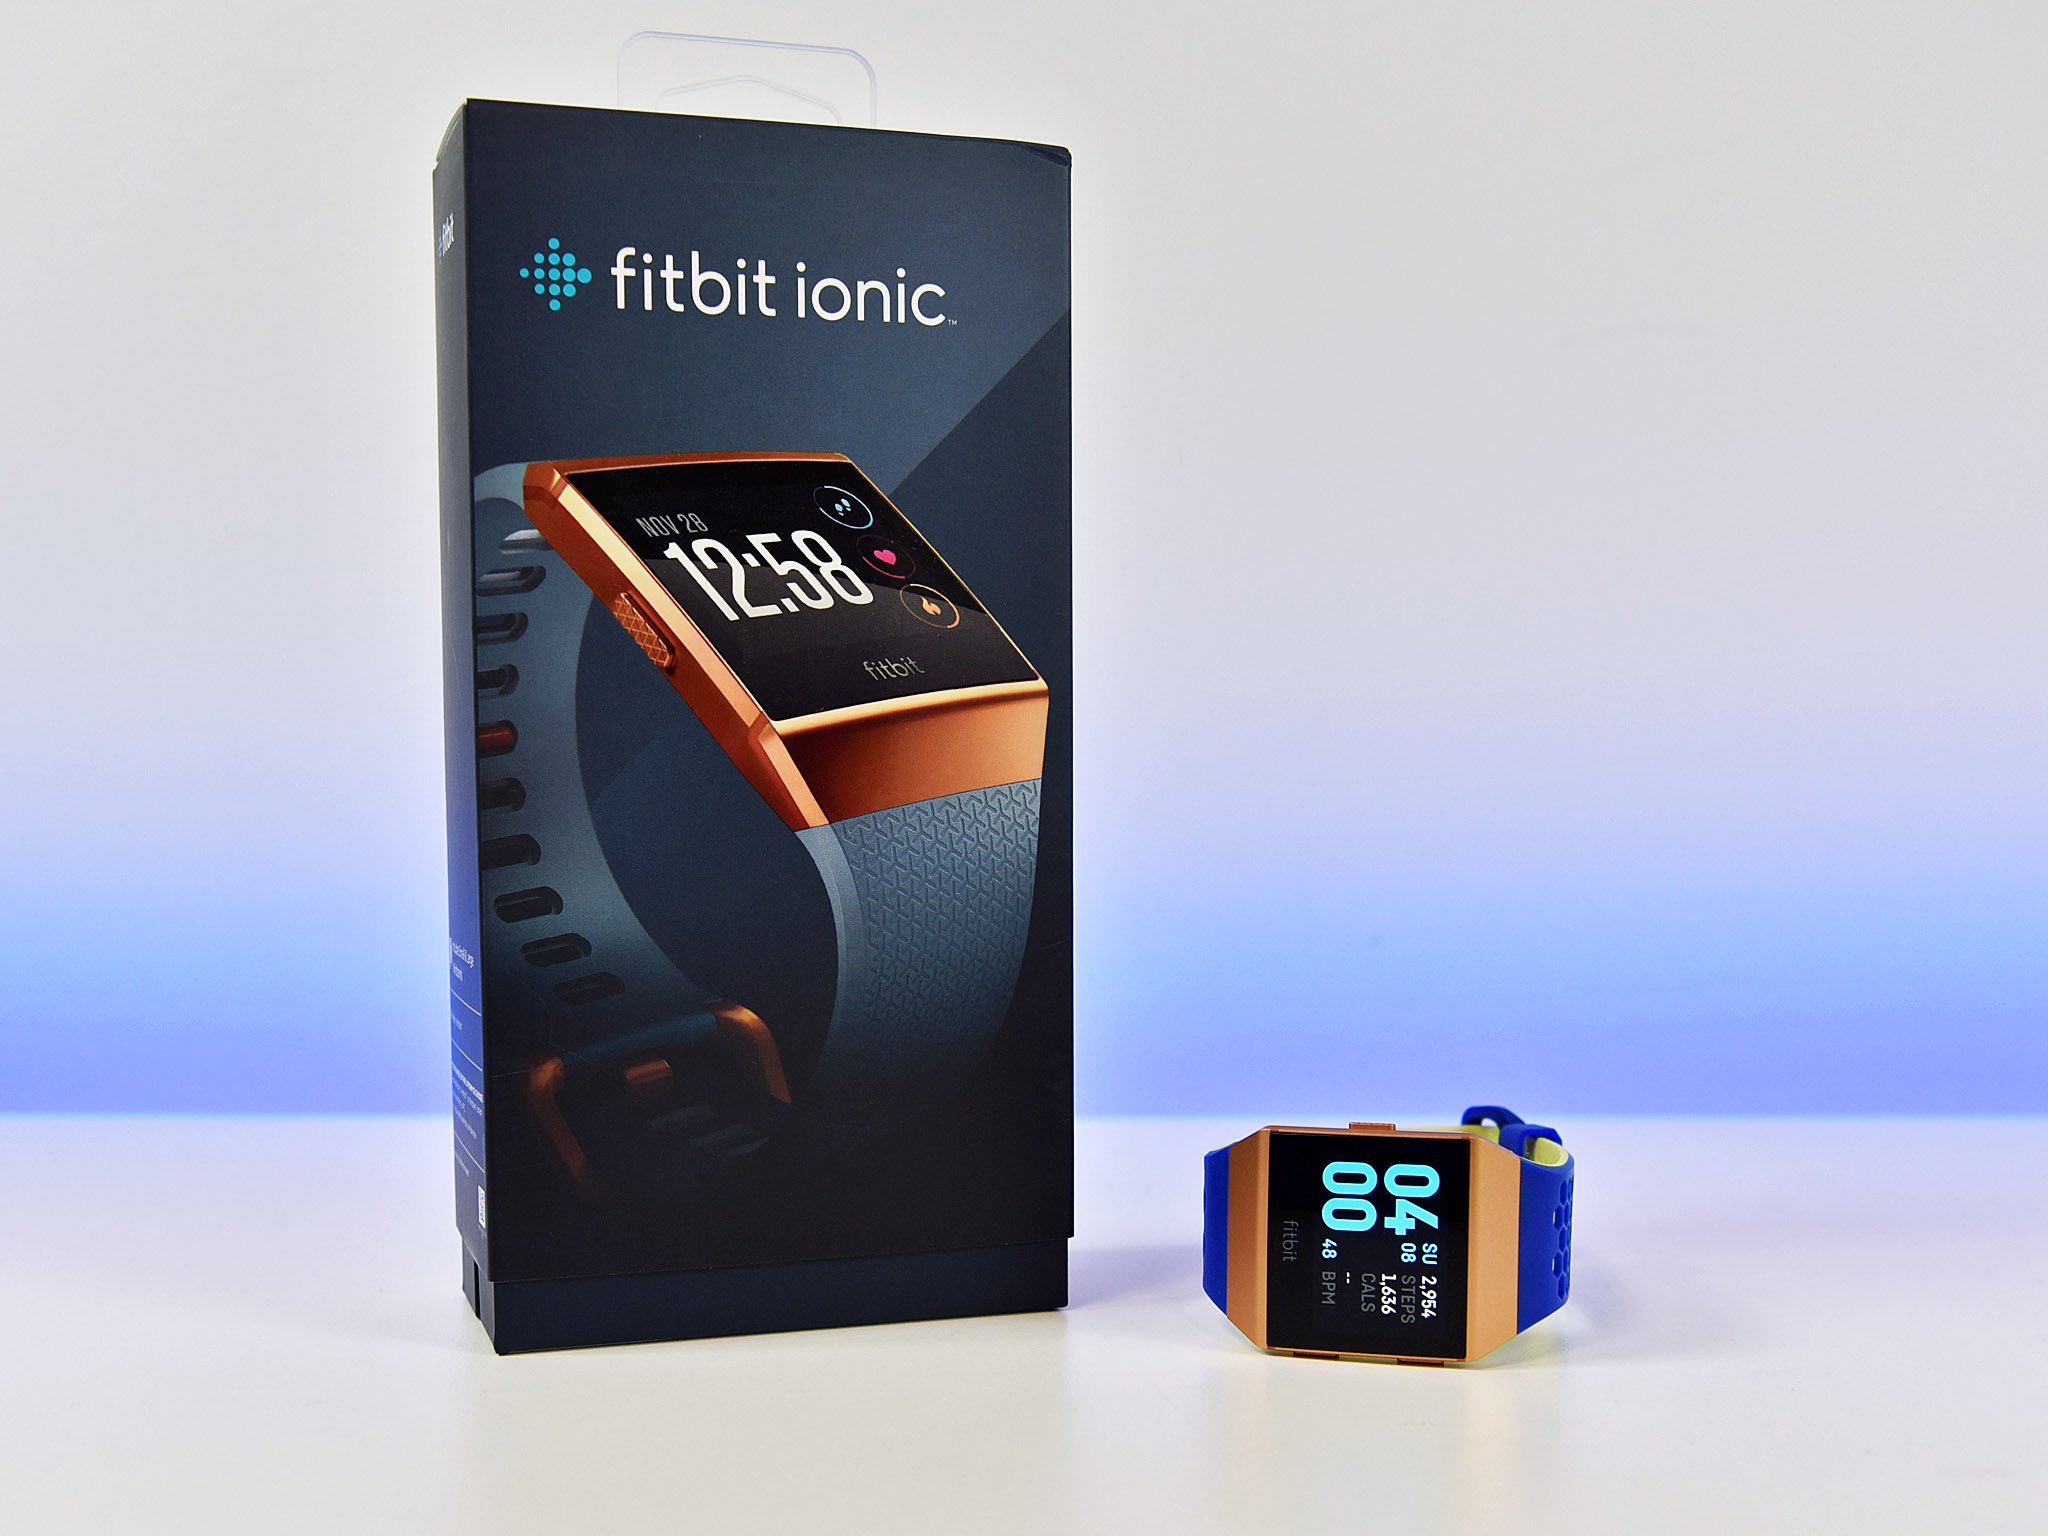 fitbit ionic box